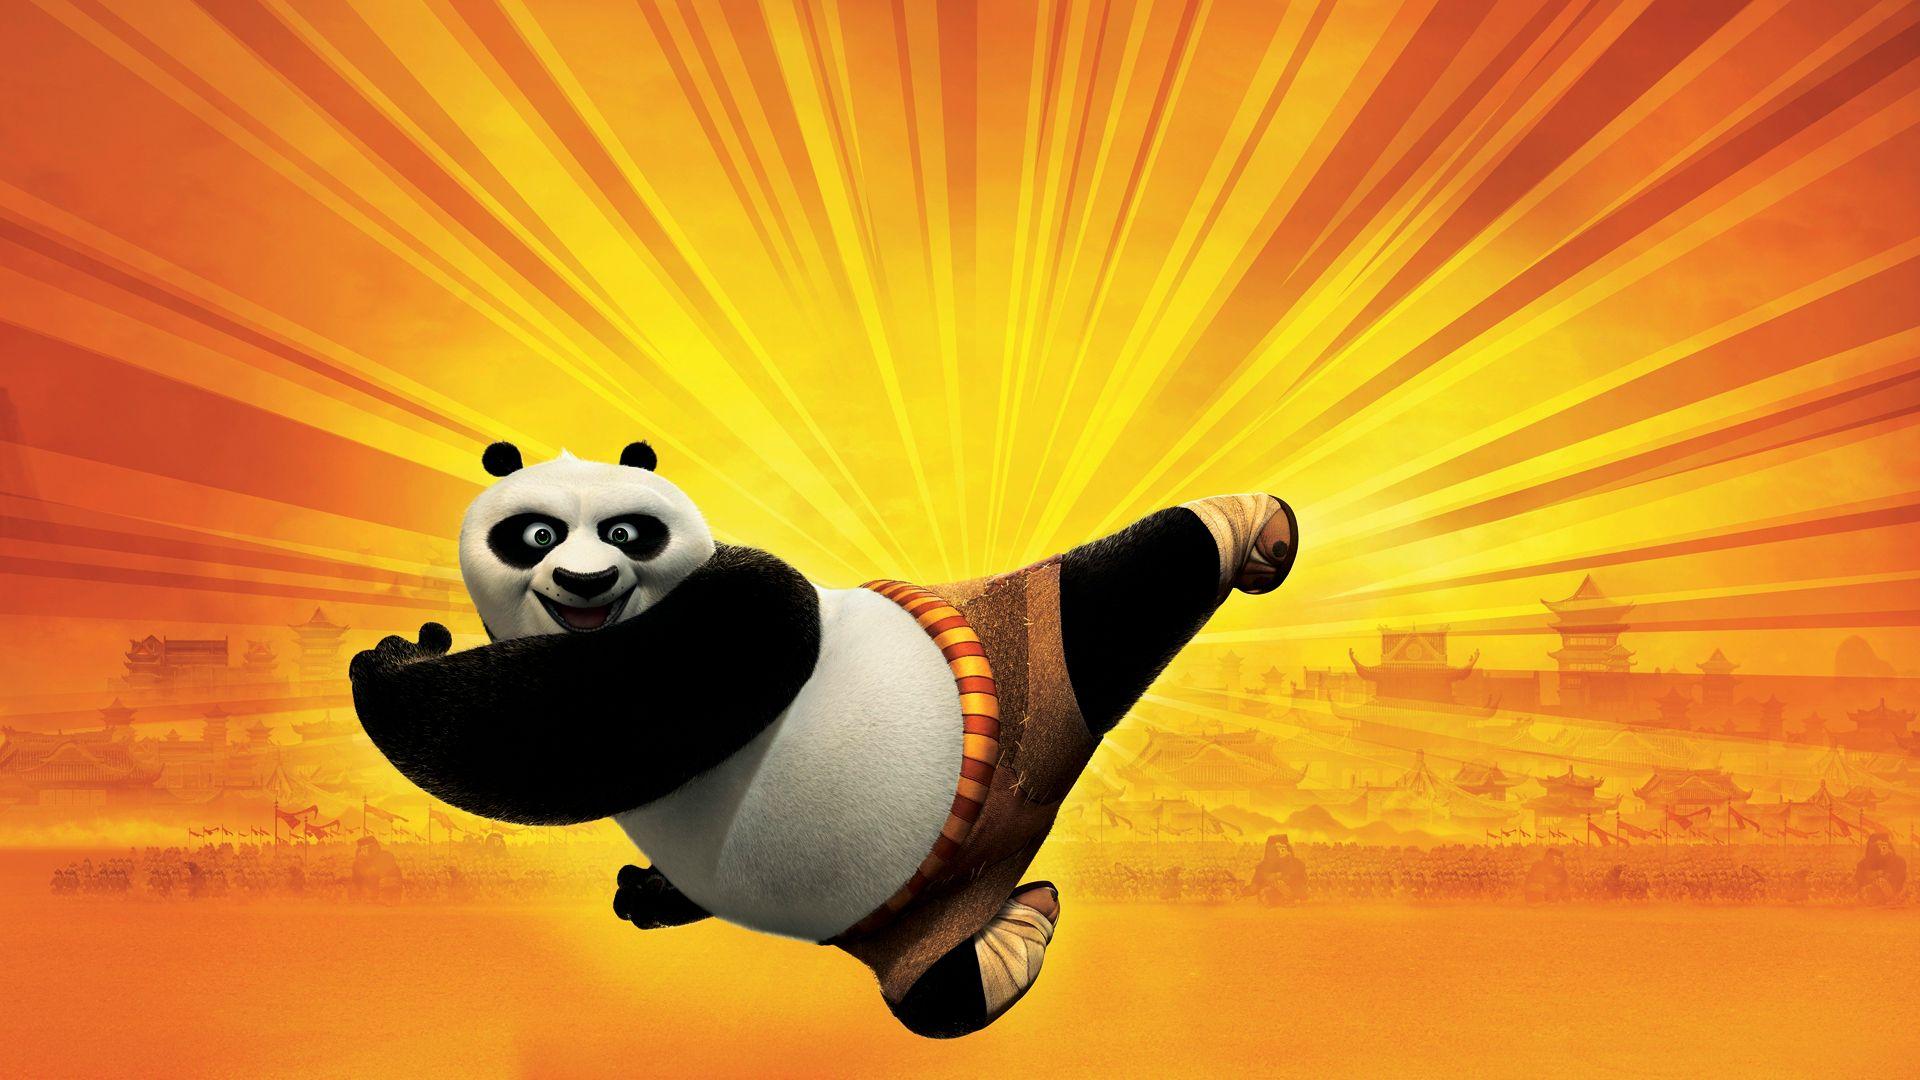 Kung Fu Panda Wallpapers - Top Free Kung Fu Panda Backgrounds ...